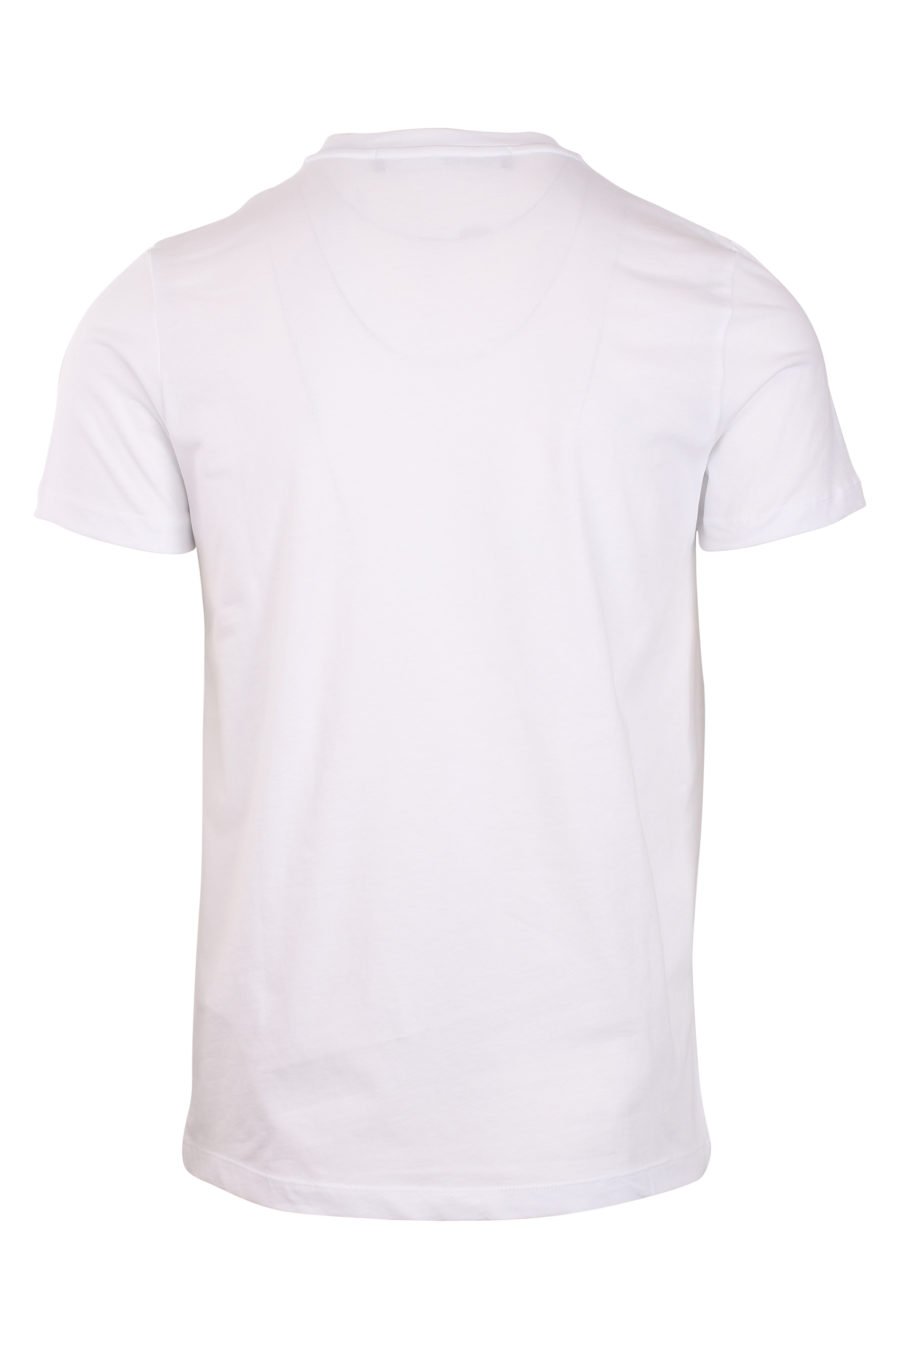 Camiseta blanca con logo retro amarillo - IMG 0855